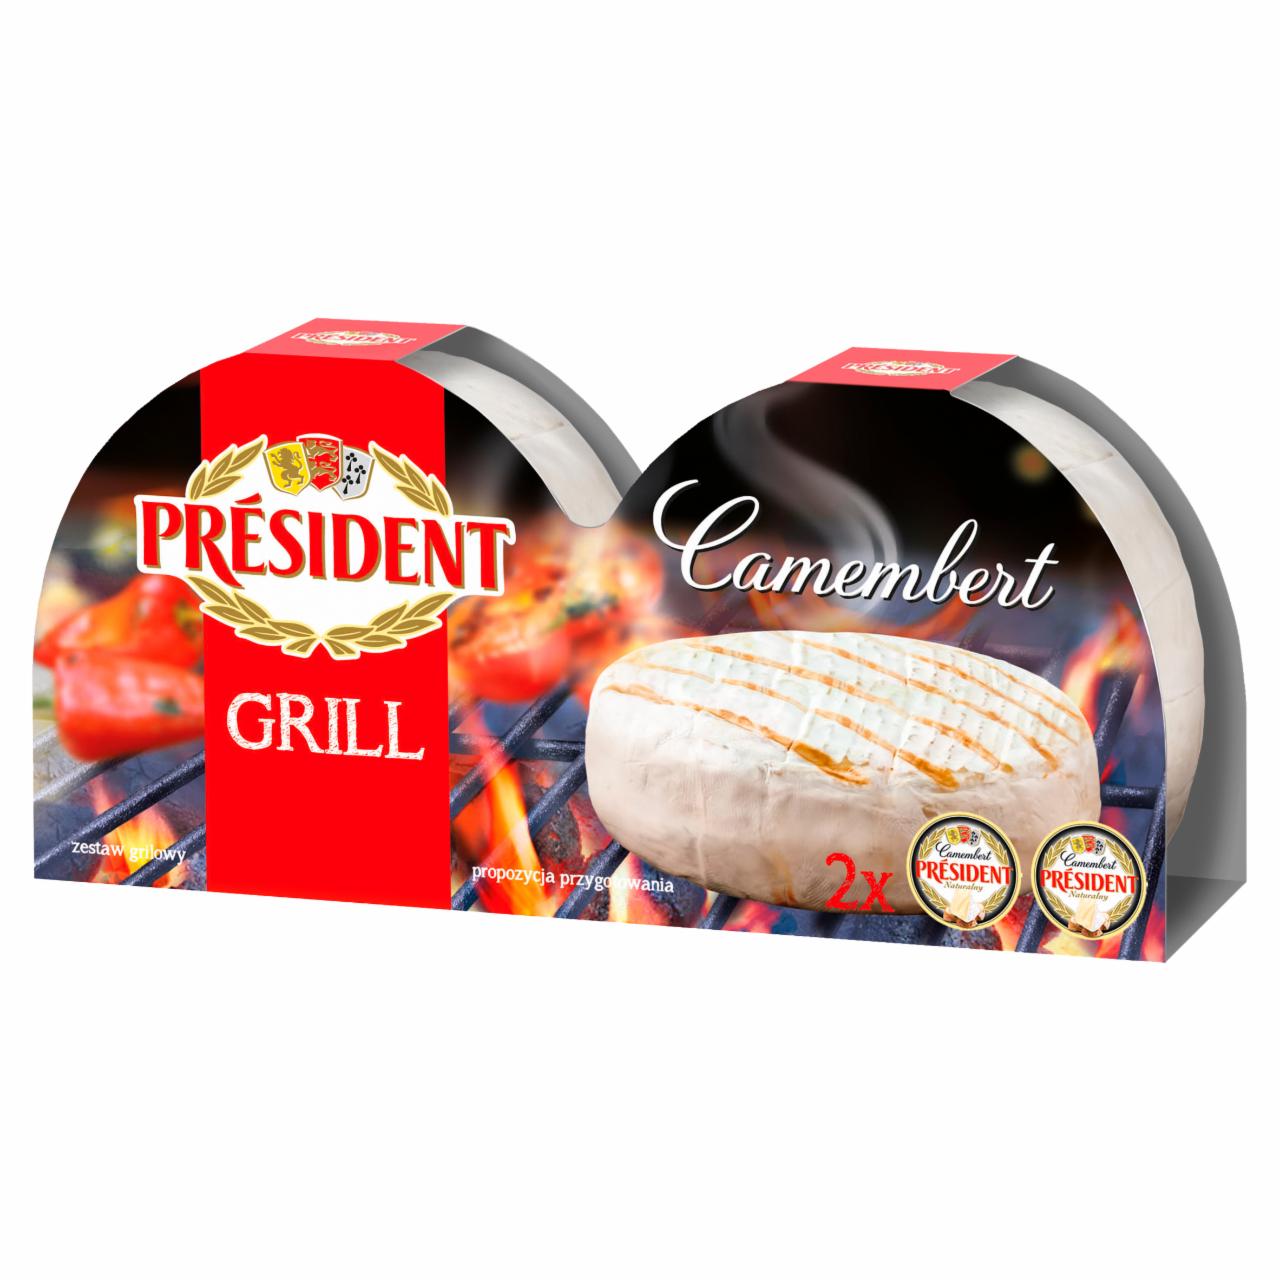 Képek - Président grill camembert sajt 2 x 90 g (180 g)